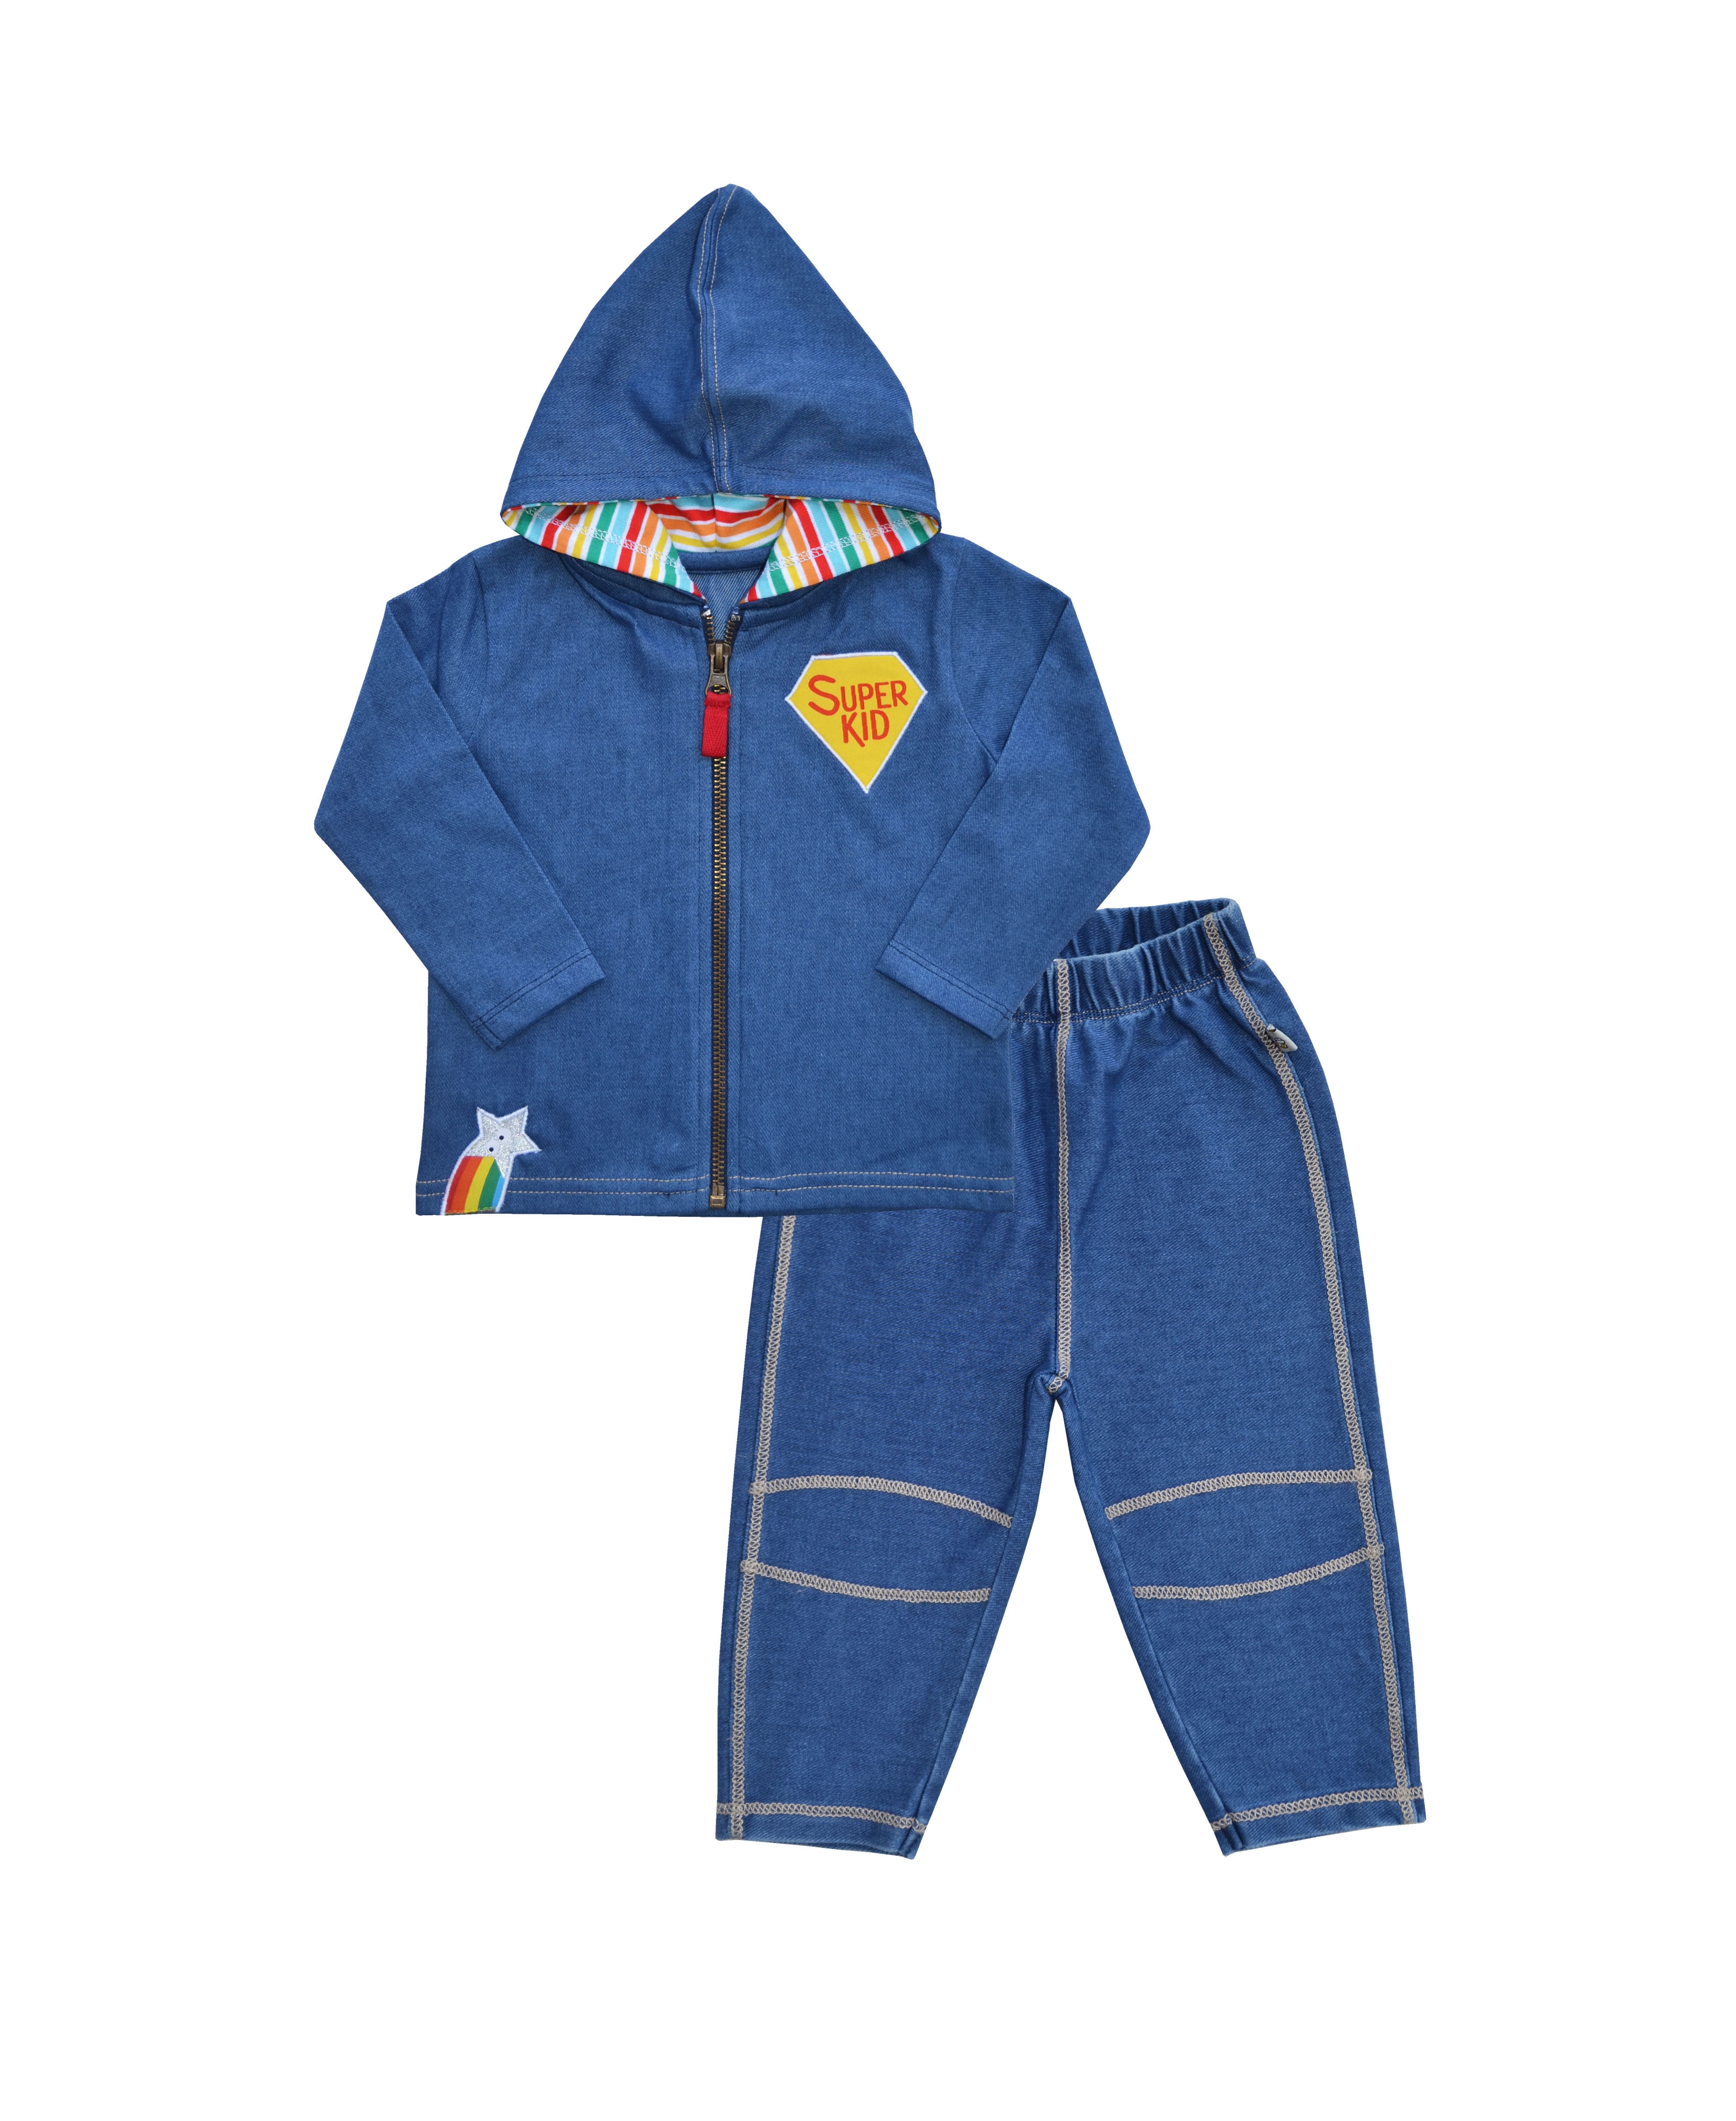 Babeez | Super Kid Denim Look Hoody Jacket and Denim Look Pant (100% Cotton Denim Look) undefined